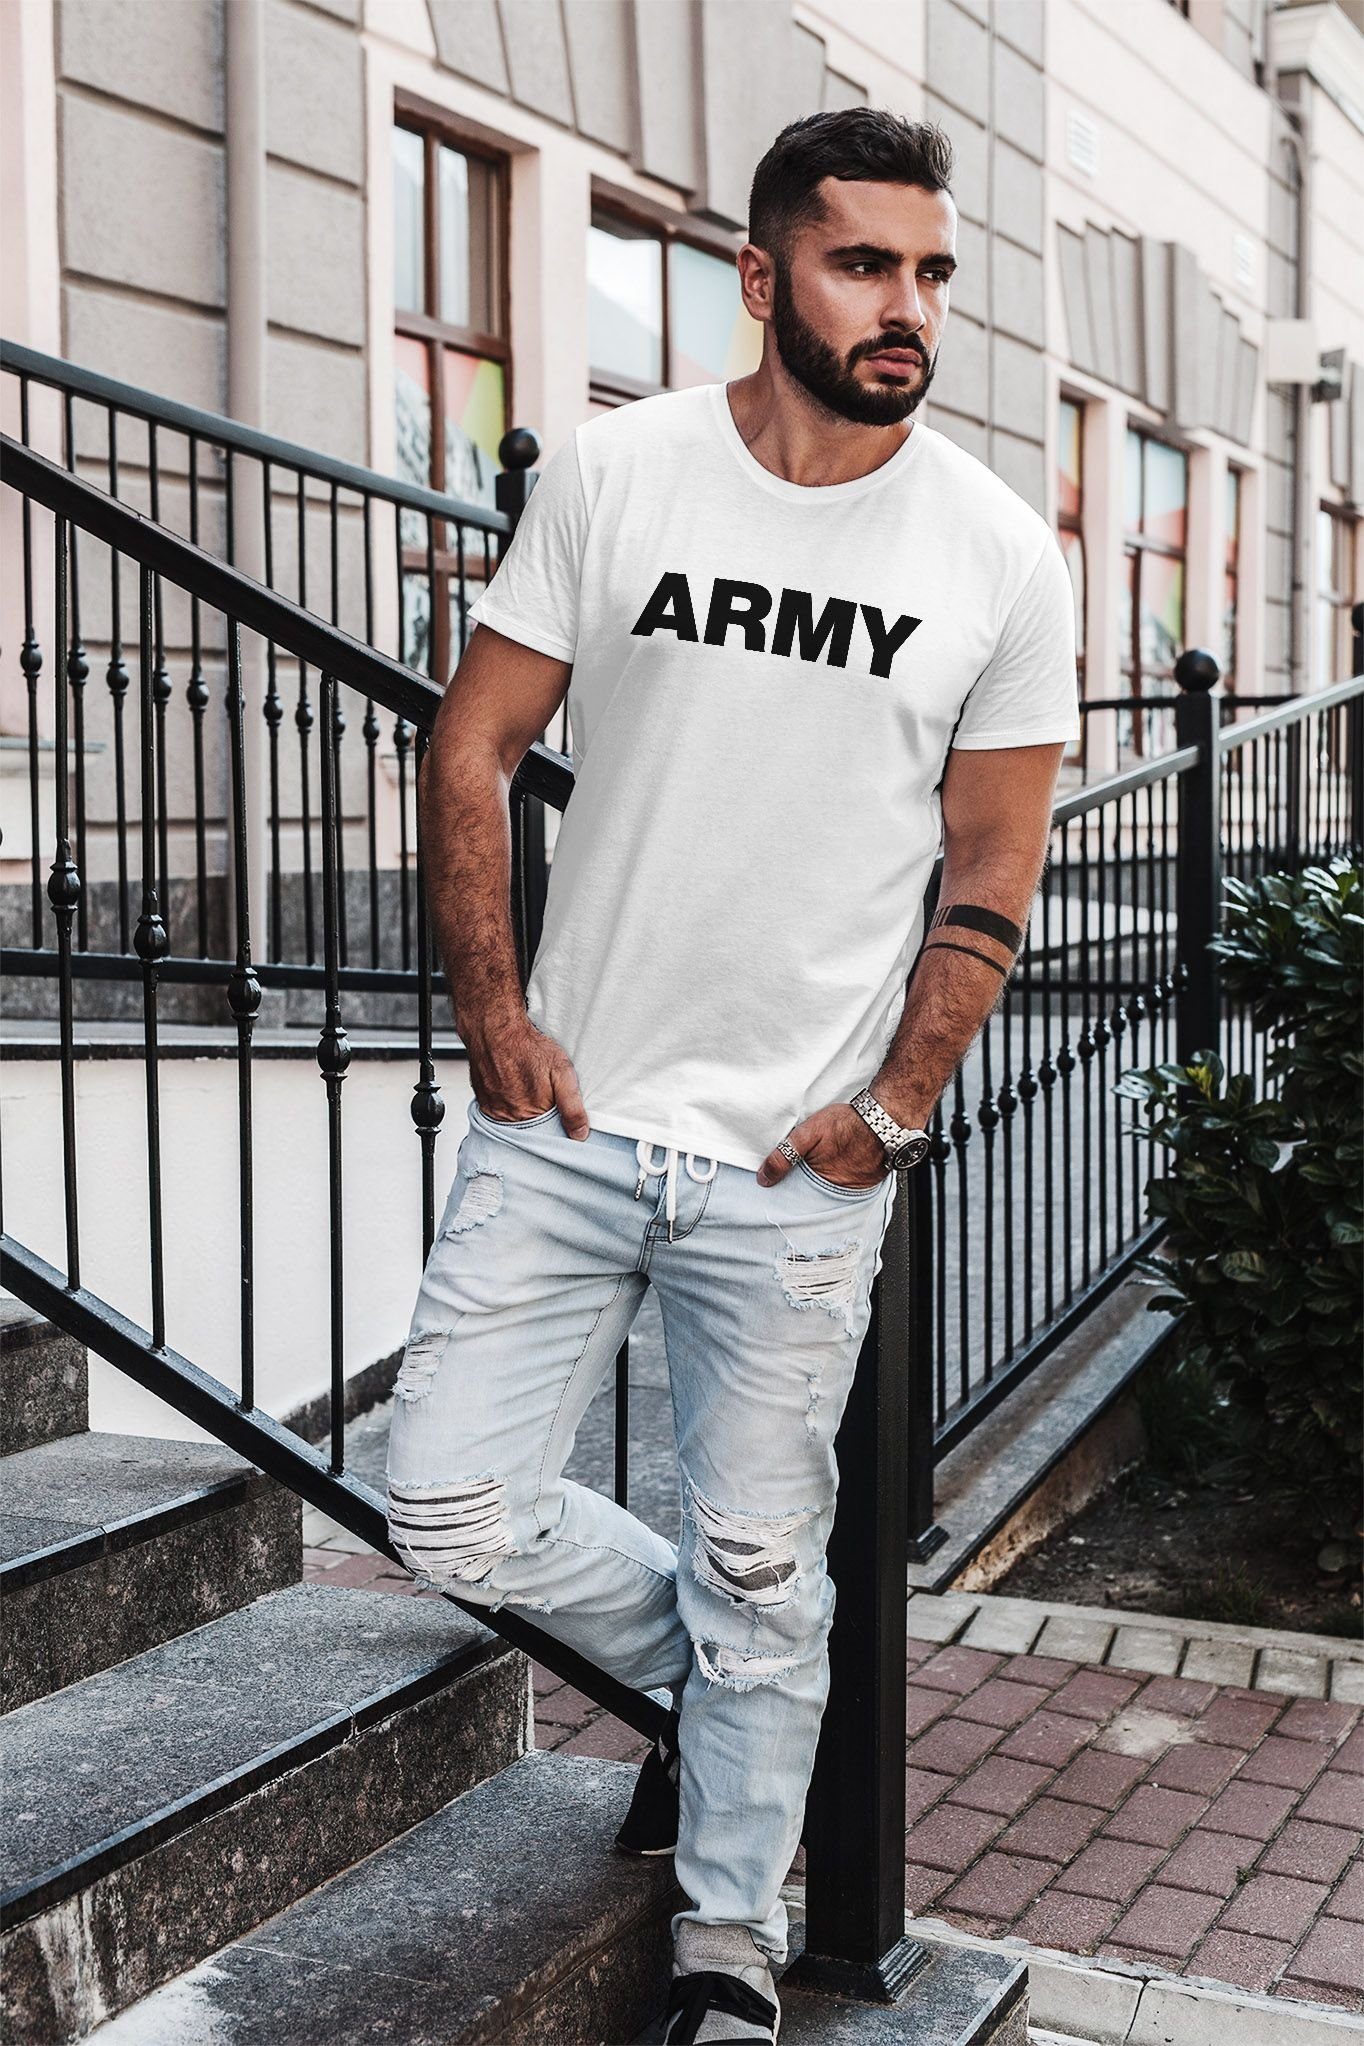 Herren Army Streetstyle weiß mit Aufdruck T-Shirt Neverless® Neverless Print-Shirt Print cooles Fashion Print